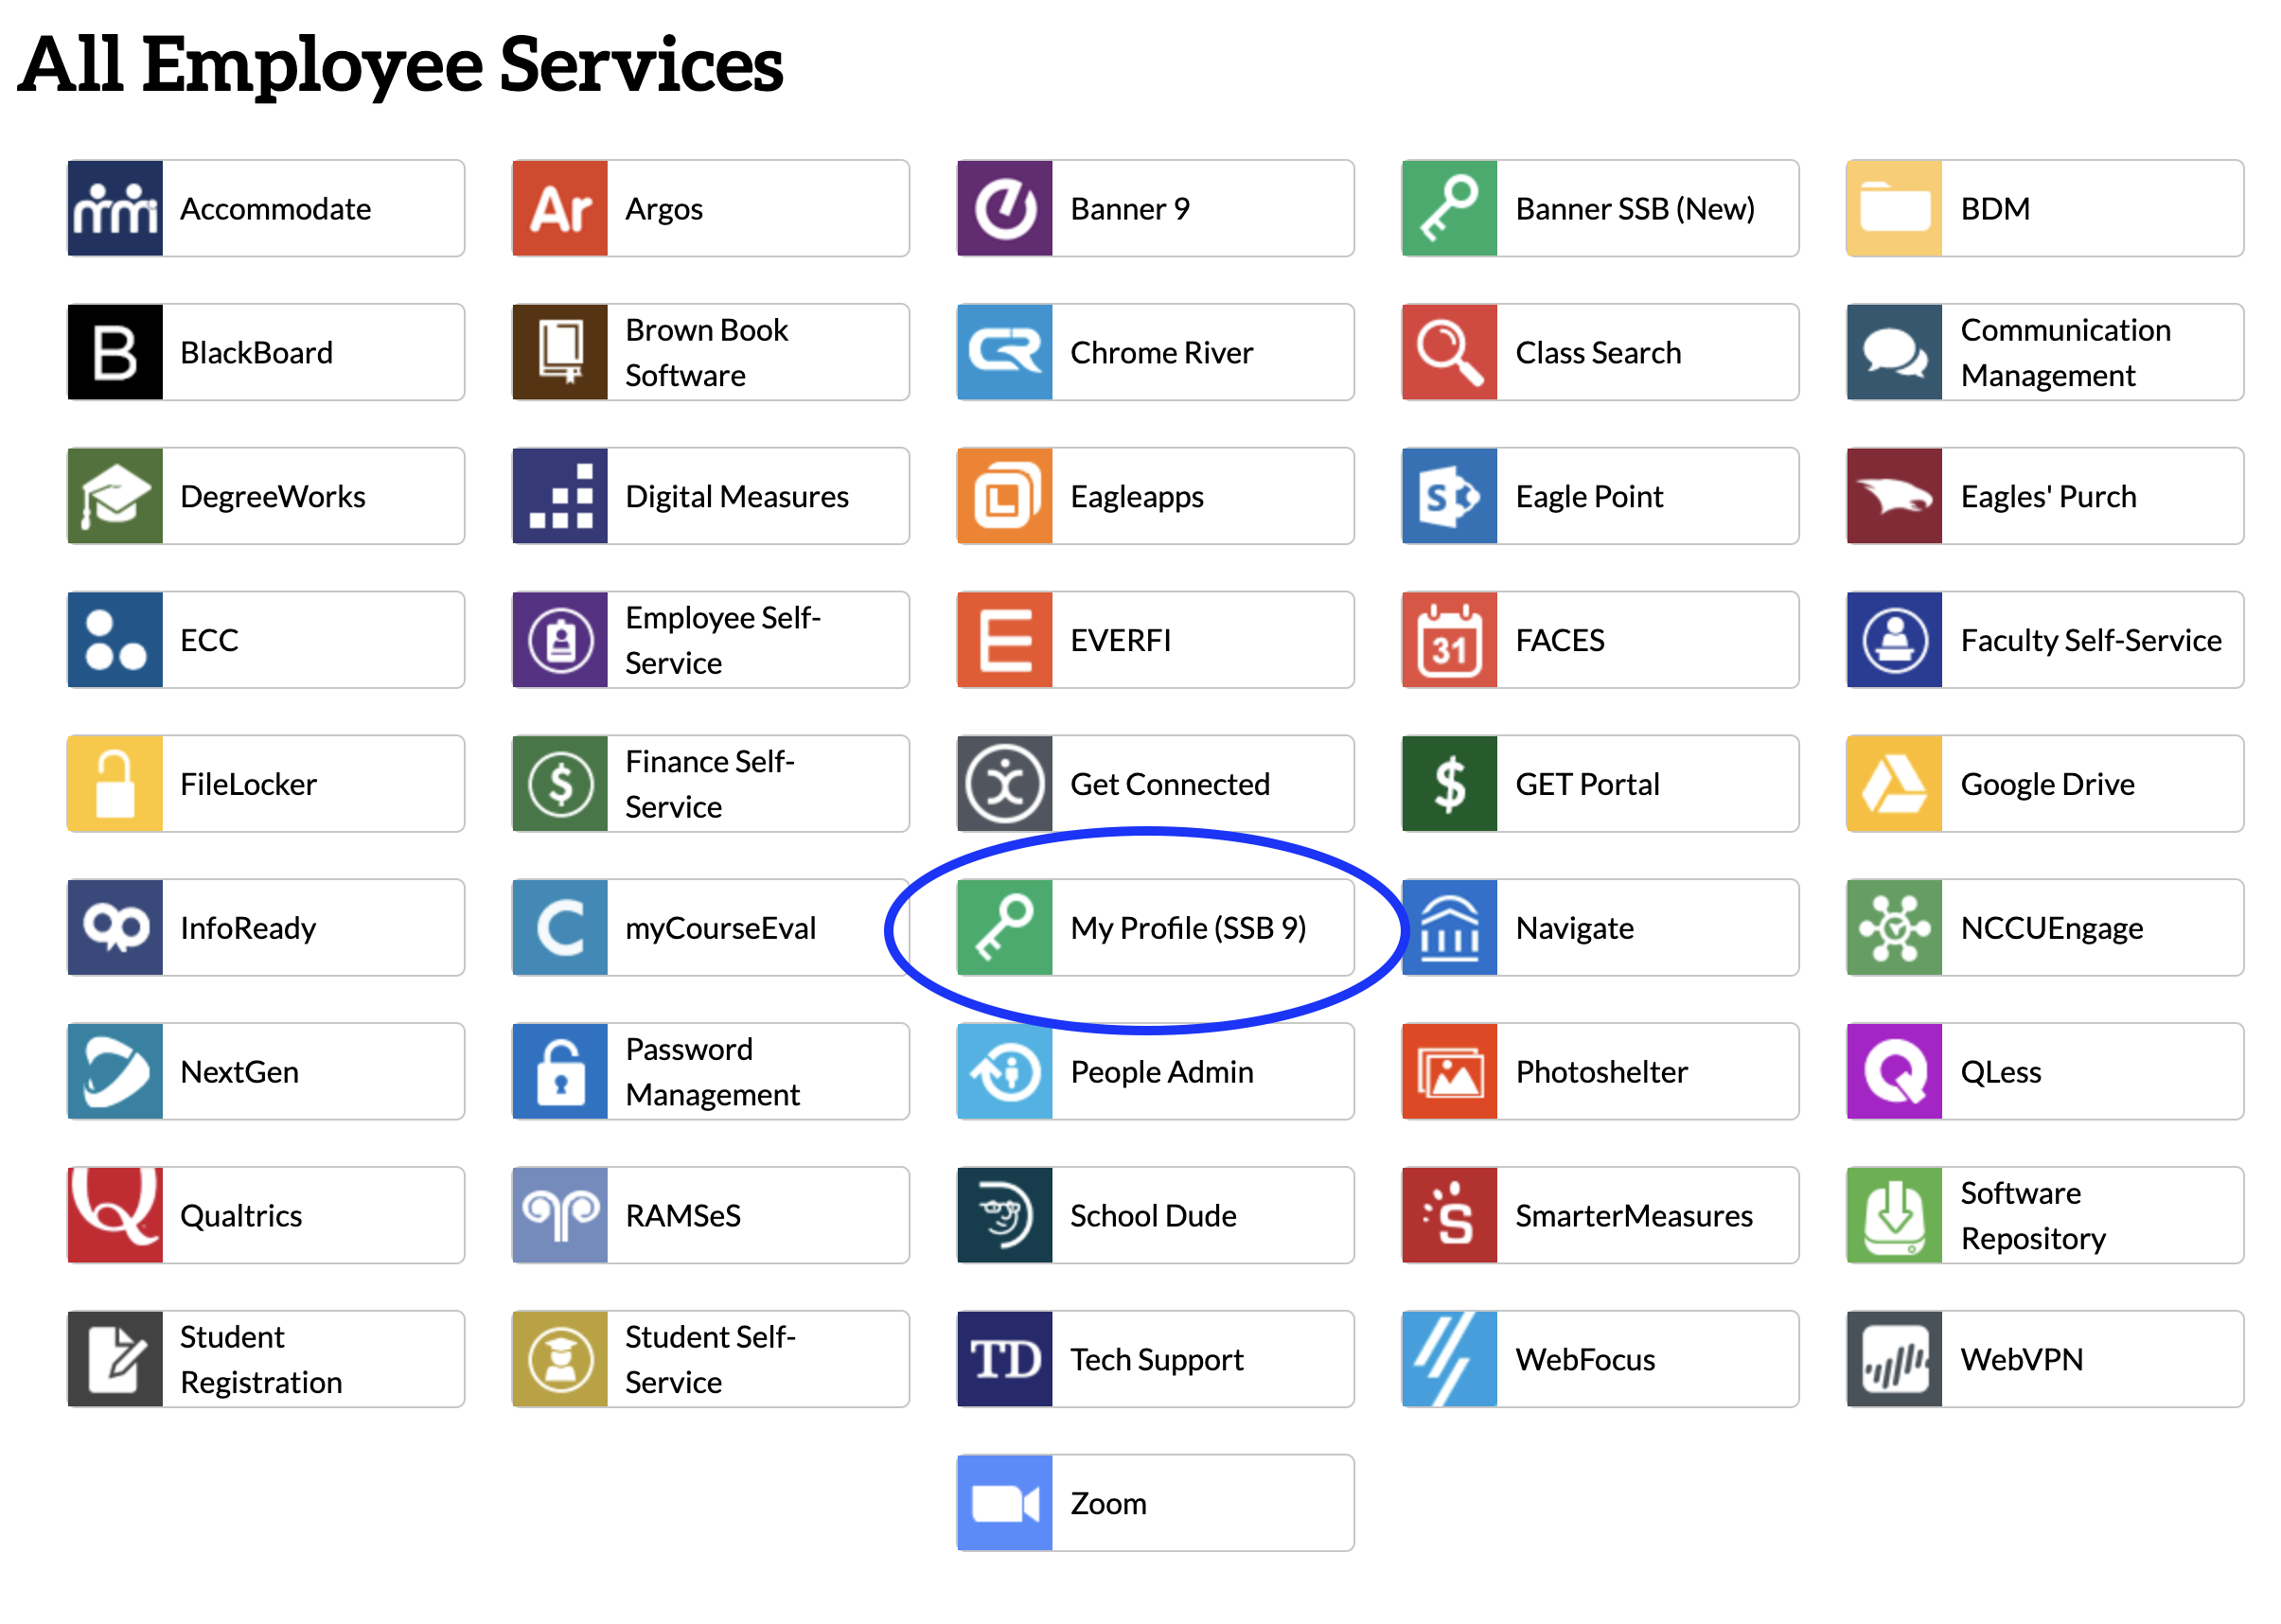 Al Employee Services screenshot from myEOL